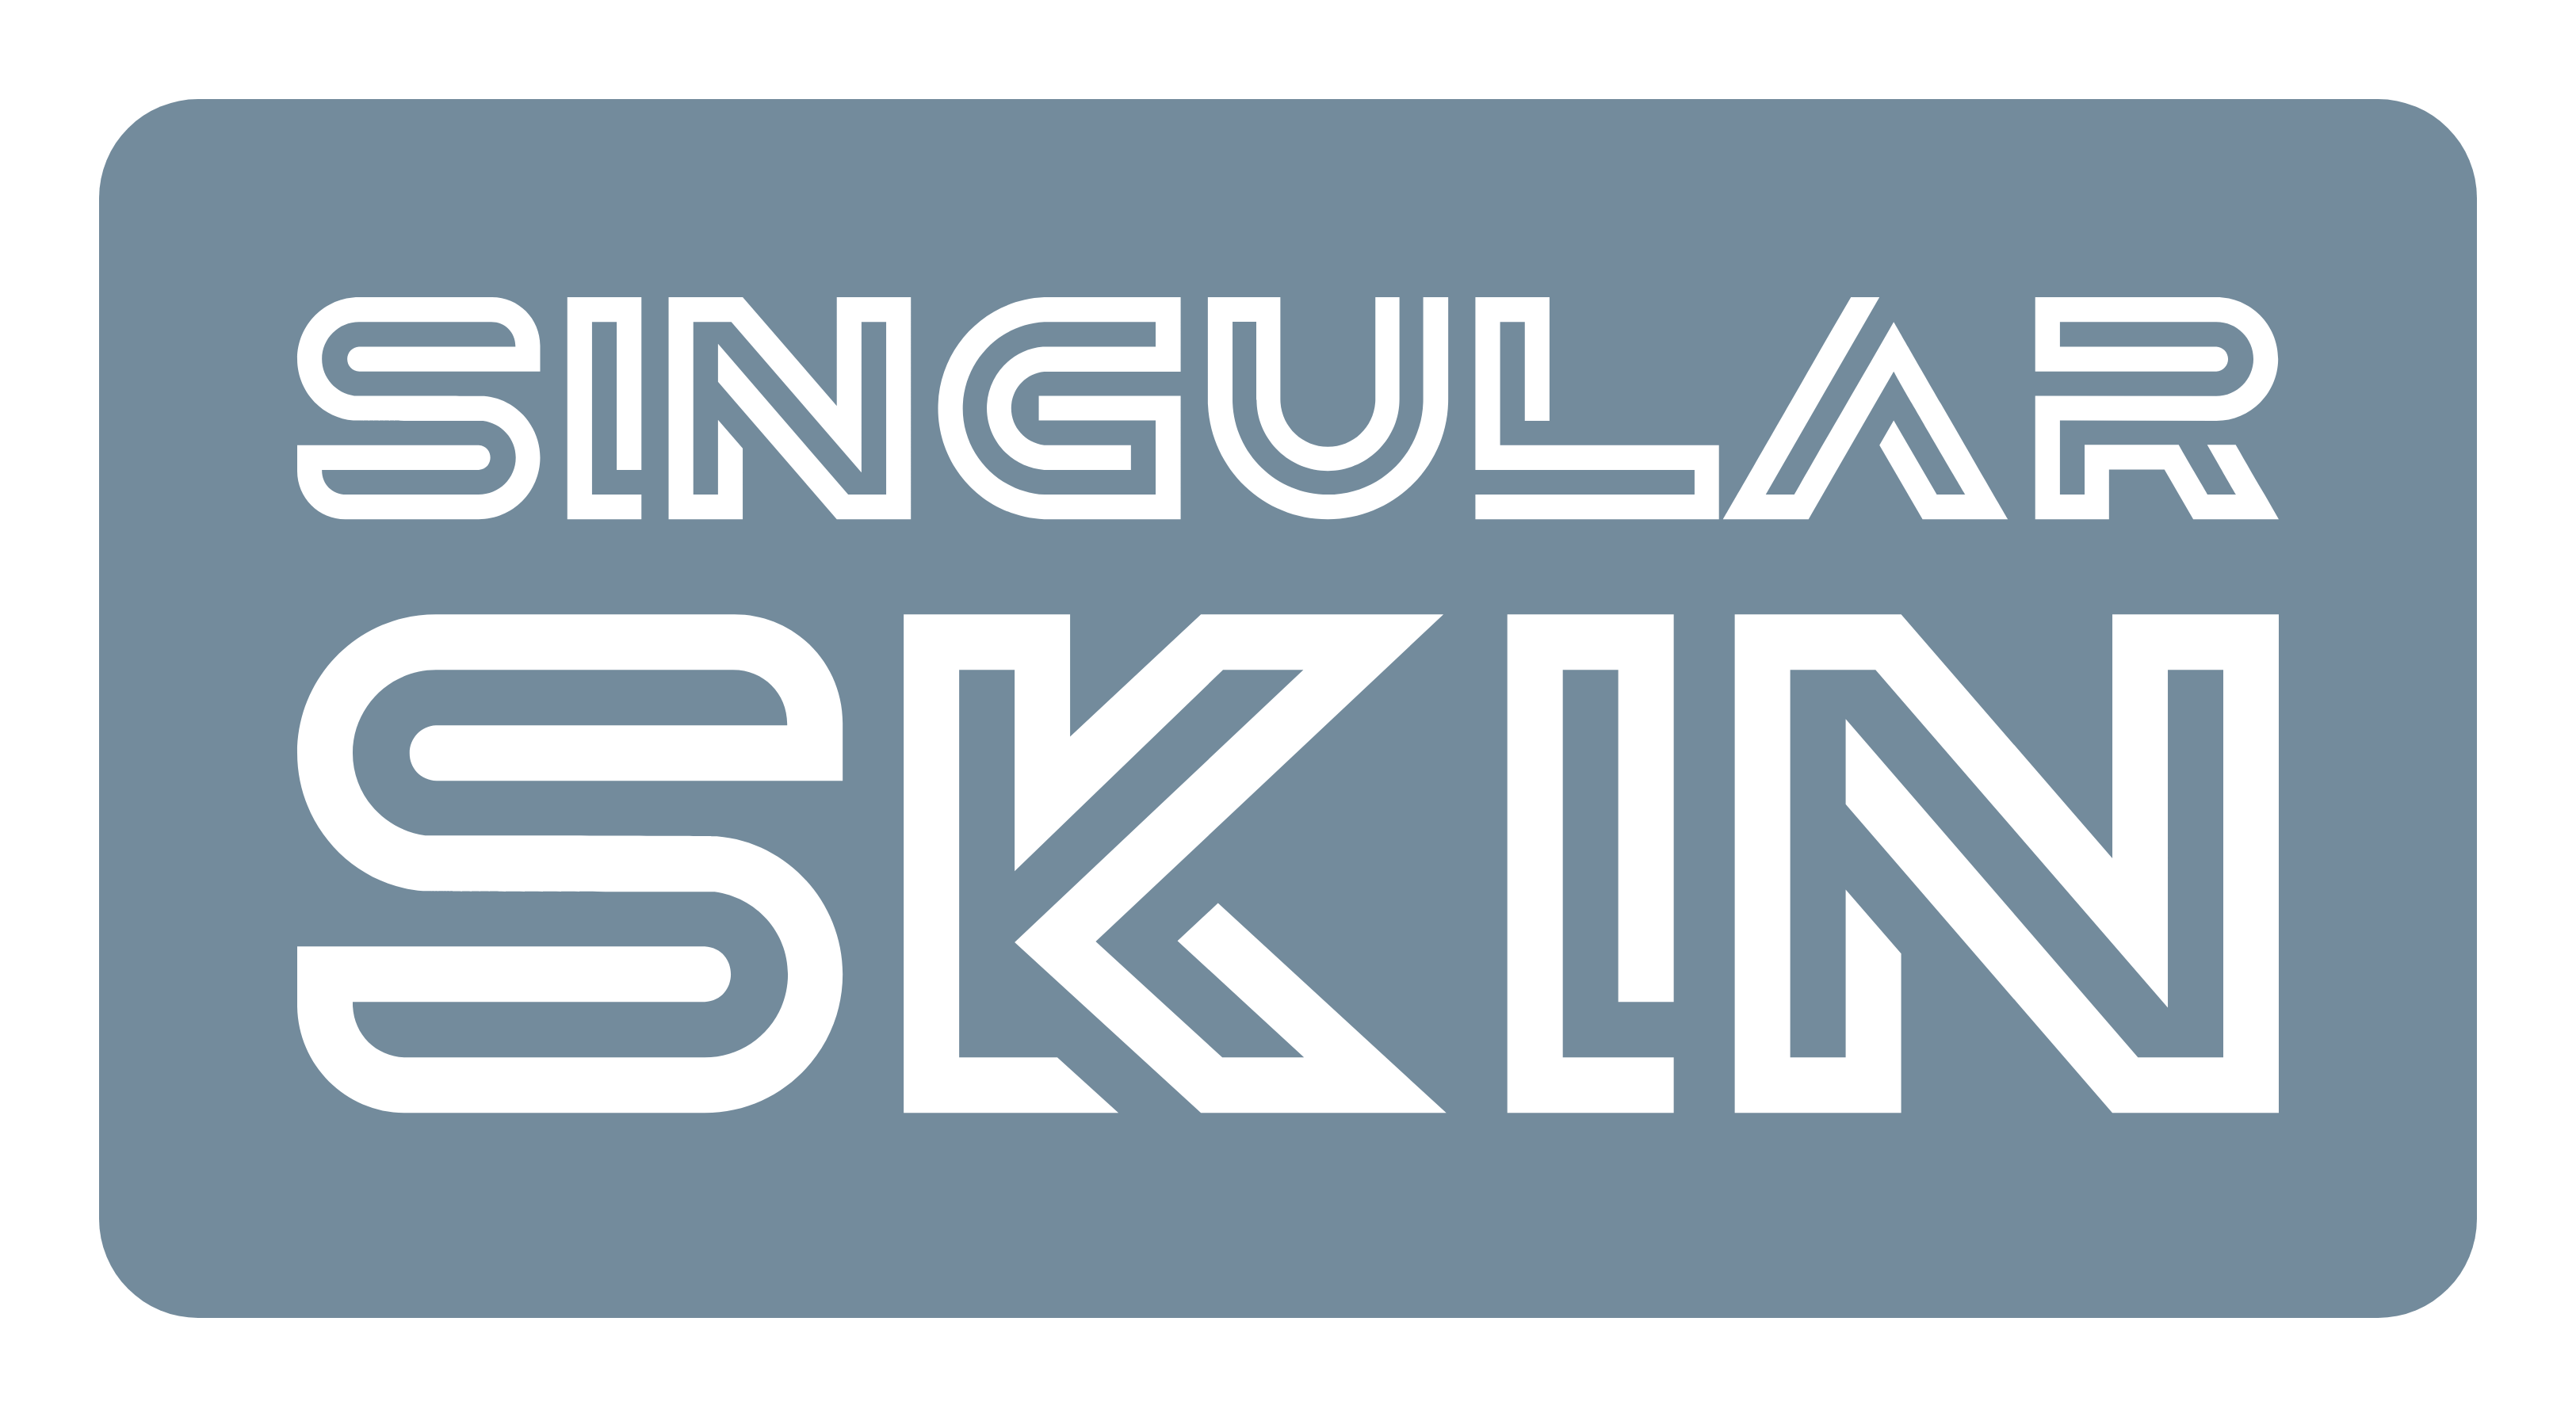 Singular Skin